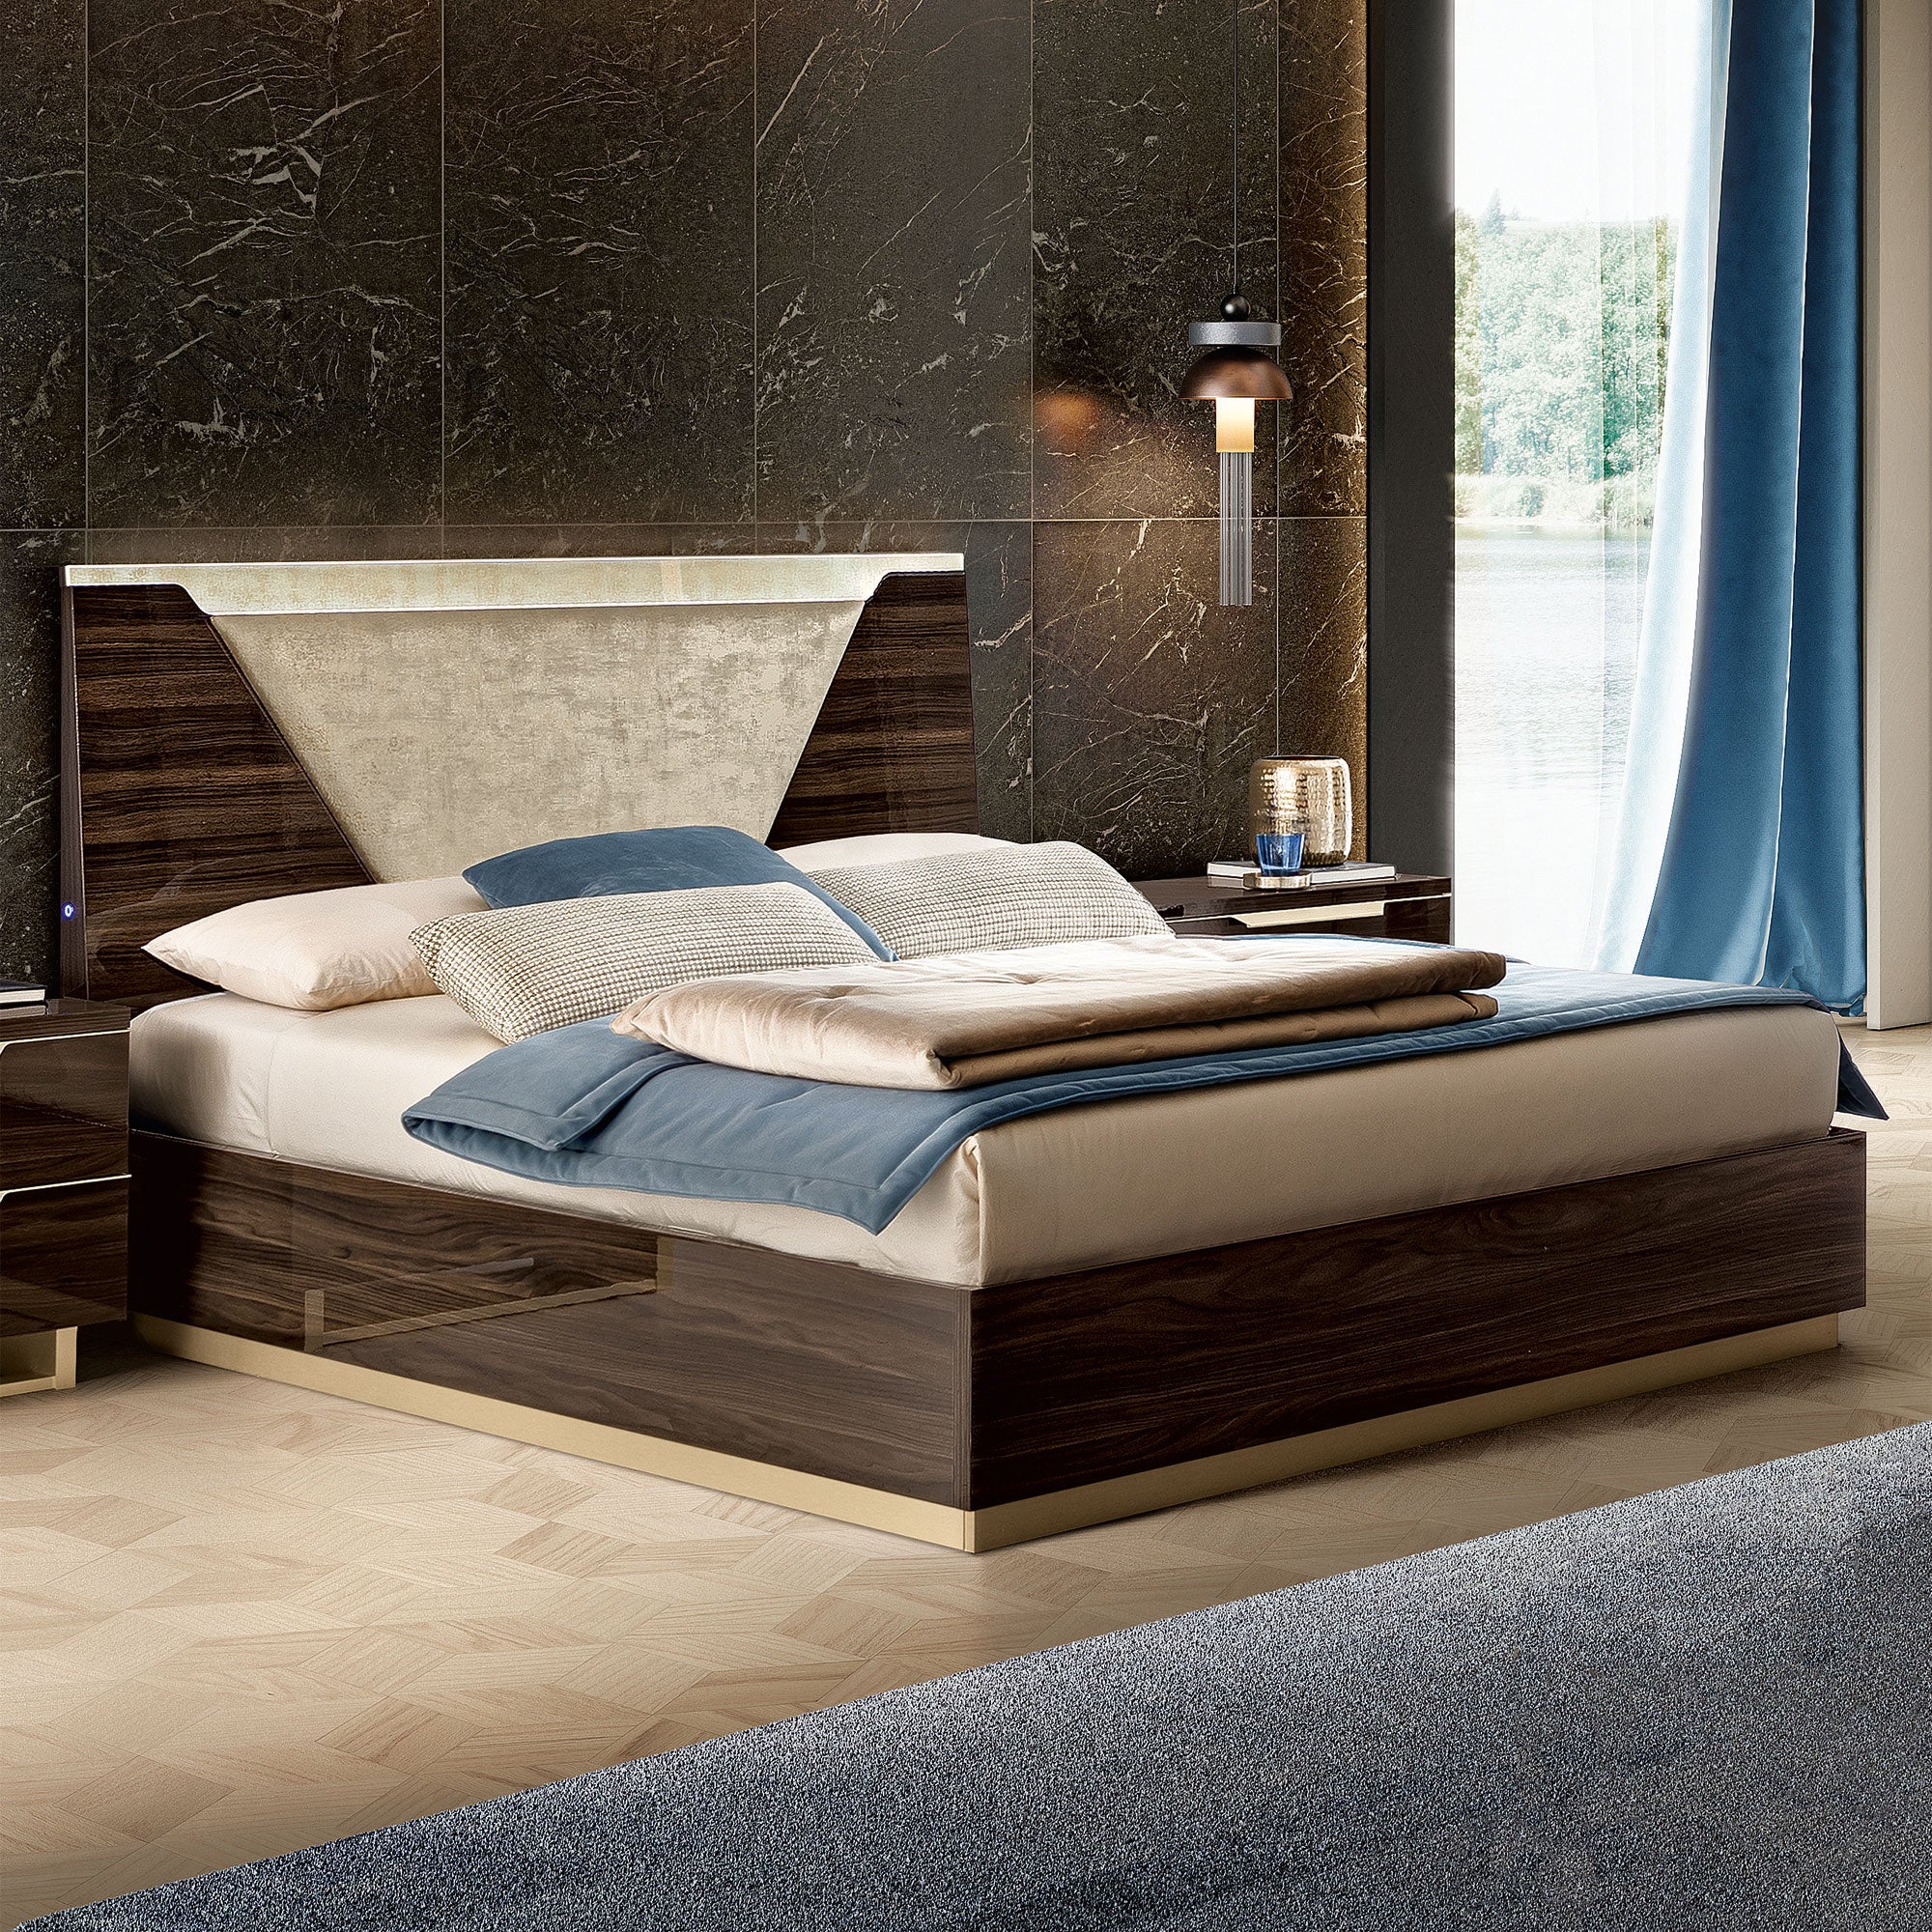 Sahara - 154cm Bed With Wooden Headboard Including LED Lights In Glossy Dark Walnut Finish